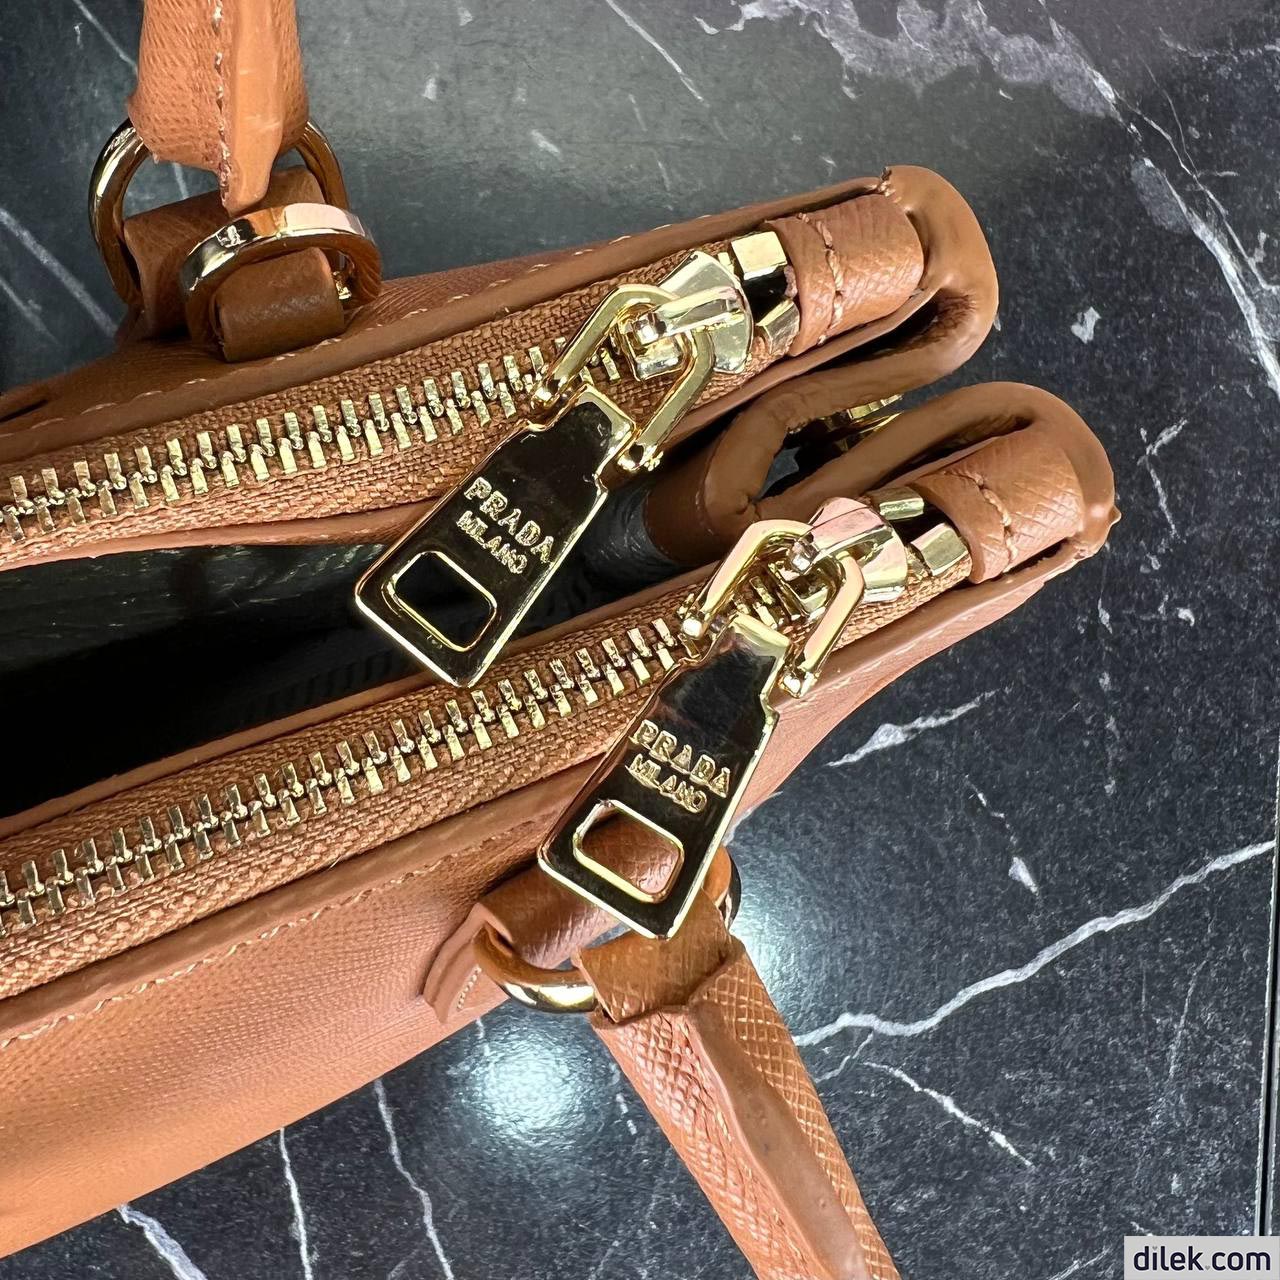 Prada Galleria Saffiano Leather Mini-Bag